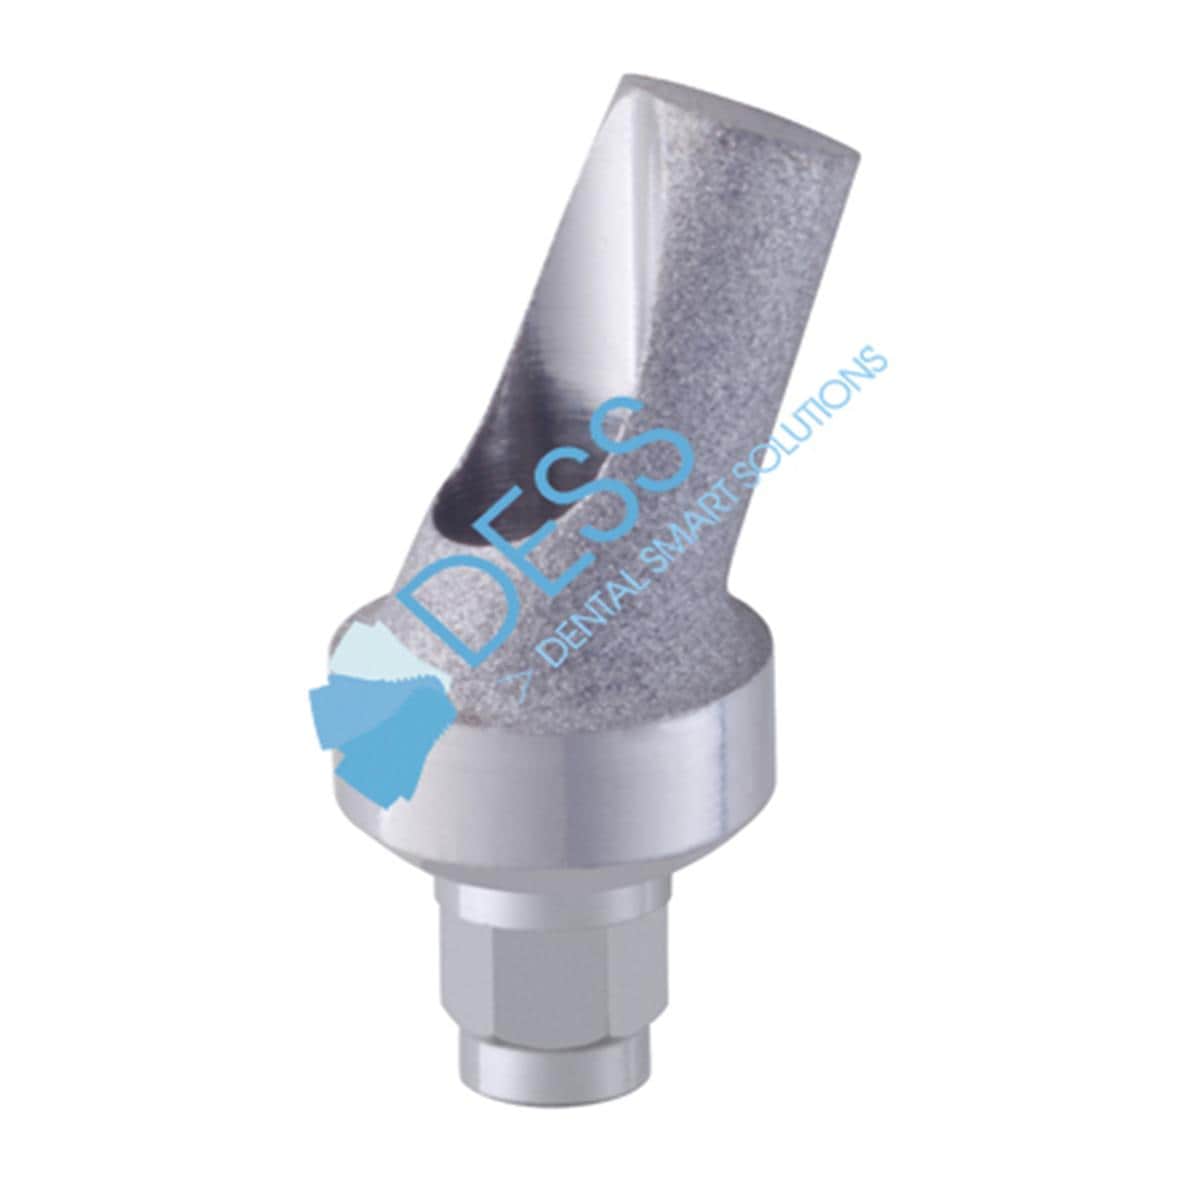 Titanabutment - kompatibel mit Dentsply Friadent® Xive® - RP Ø 3,8 mm, 25° gewinkelt